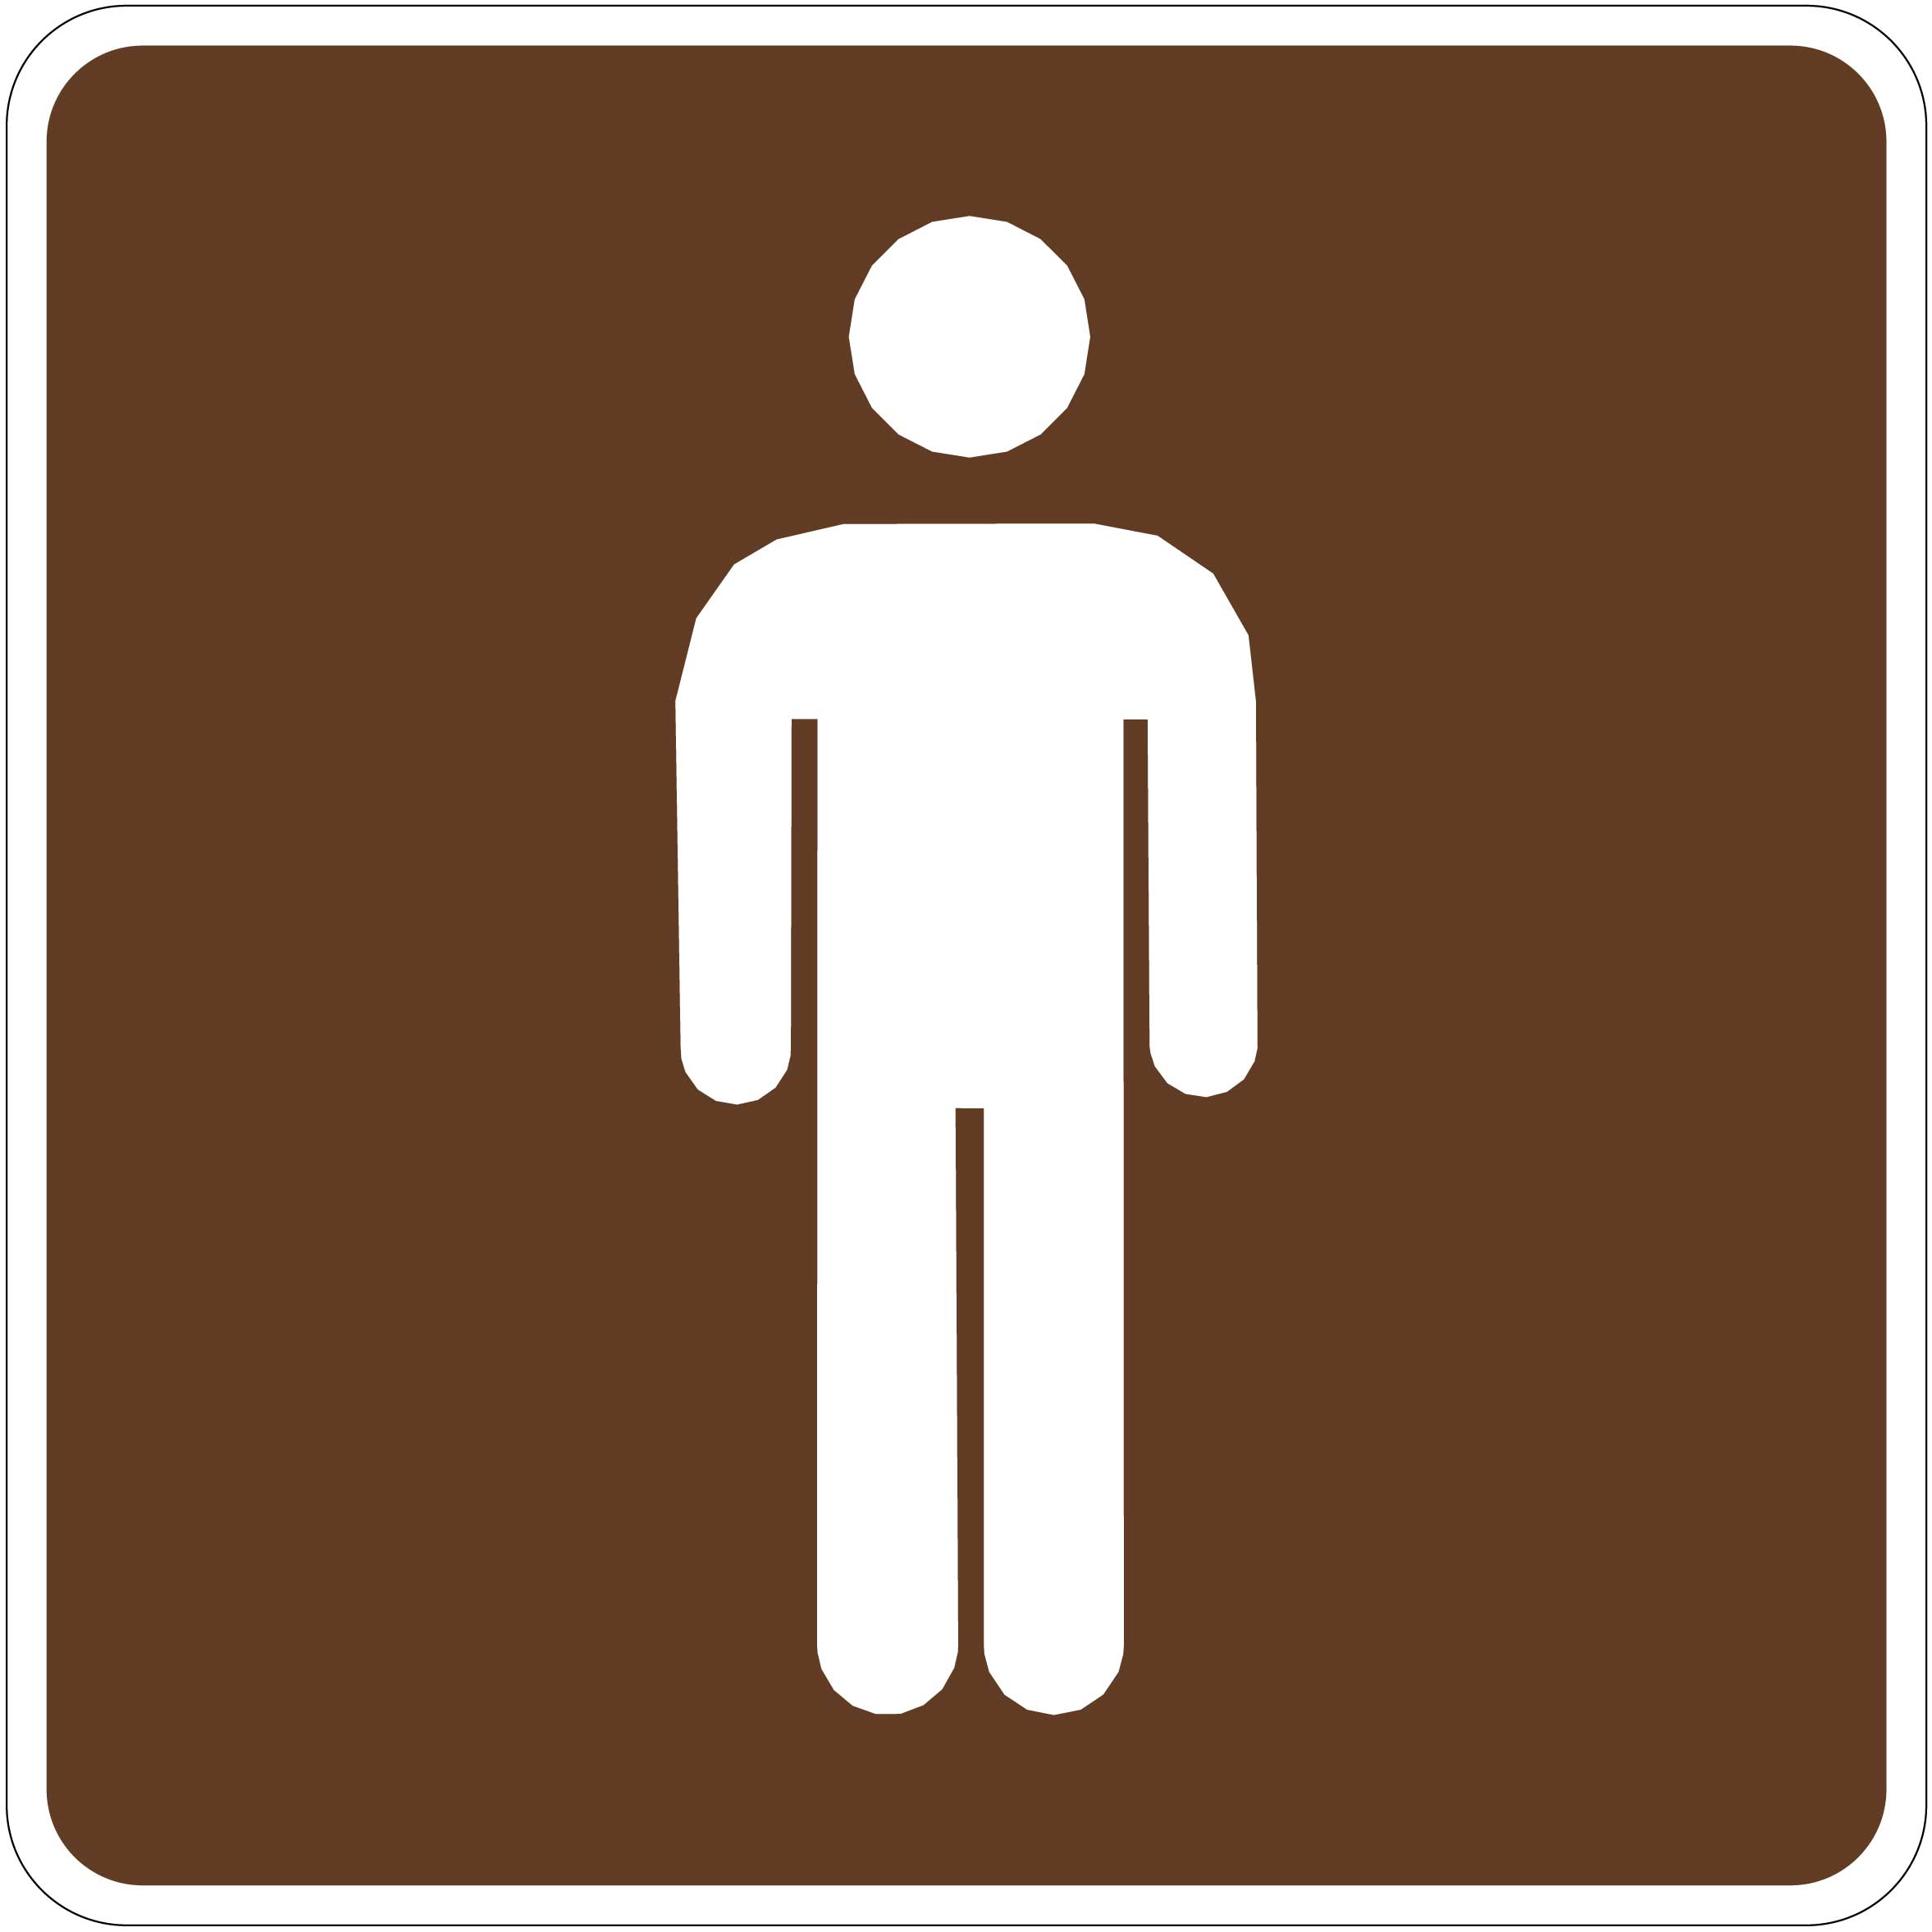 Larger Photo - Outdoor Recreation Signs - Men's Restroom Symbol ...